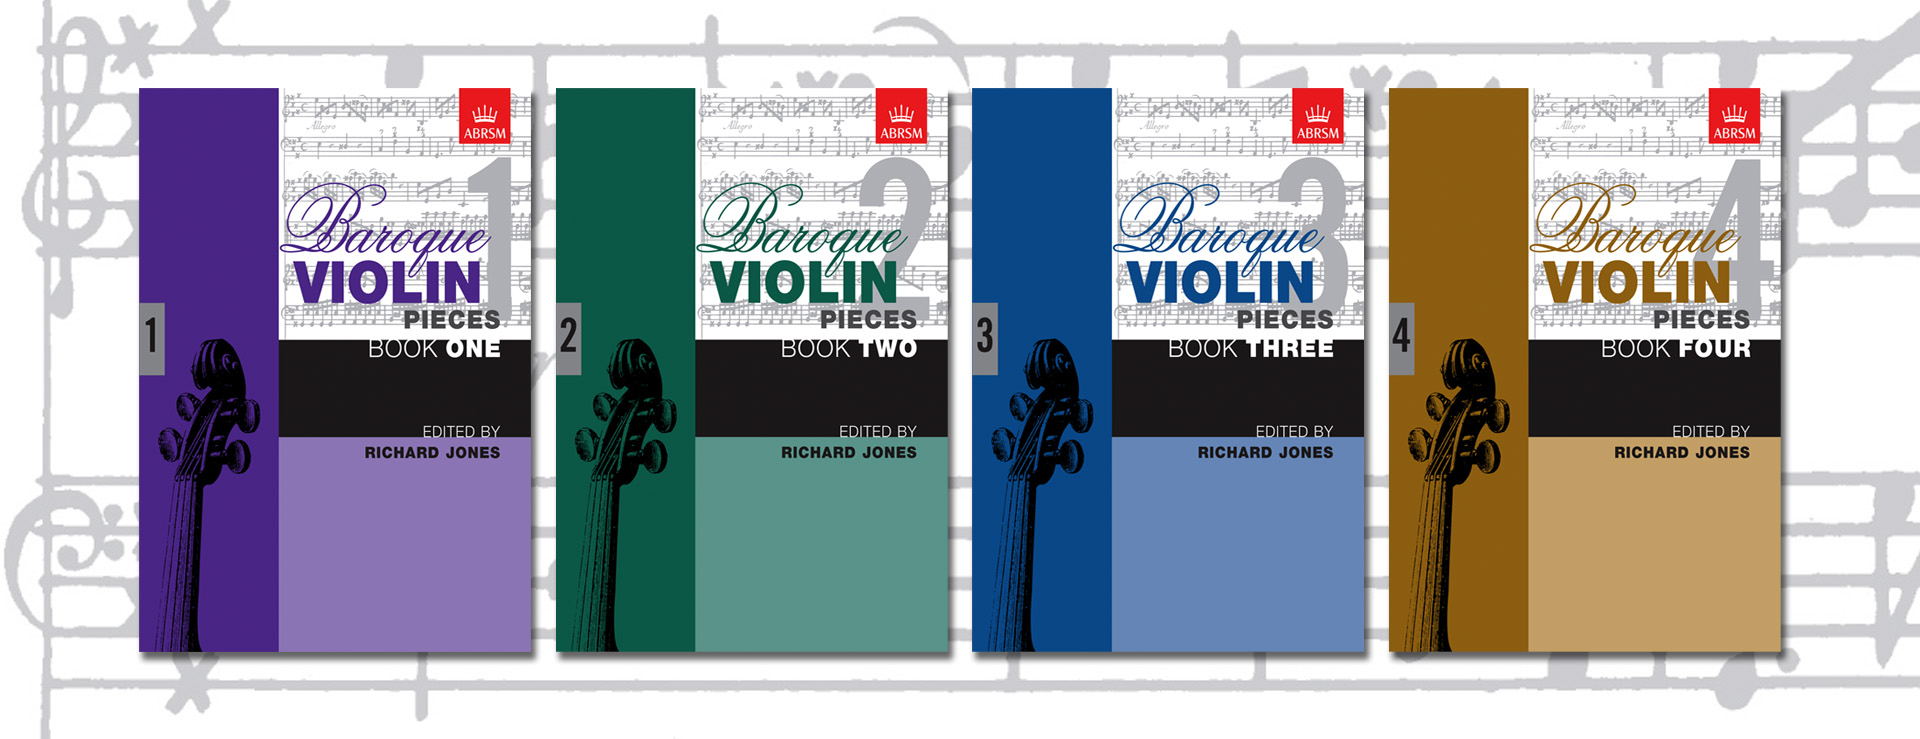 ABRSM Baroque Violin series